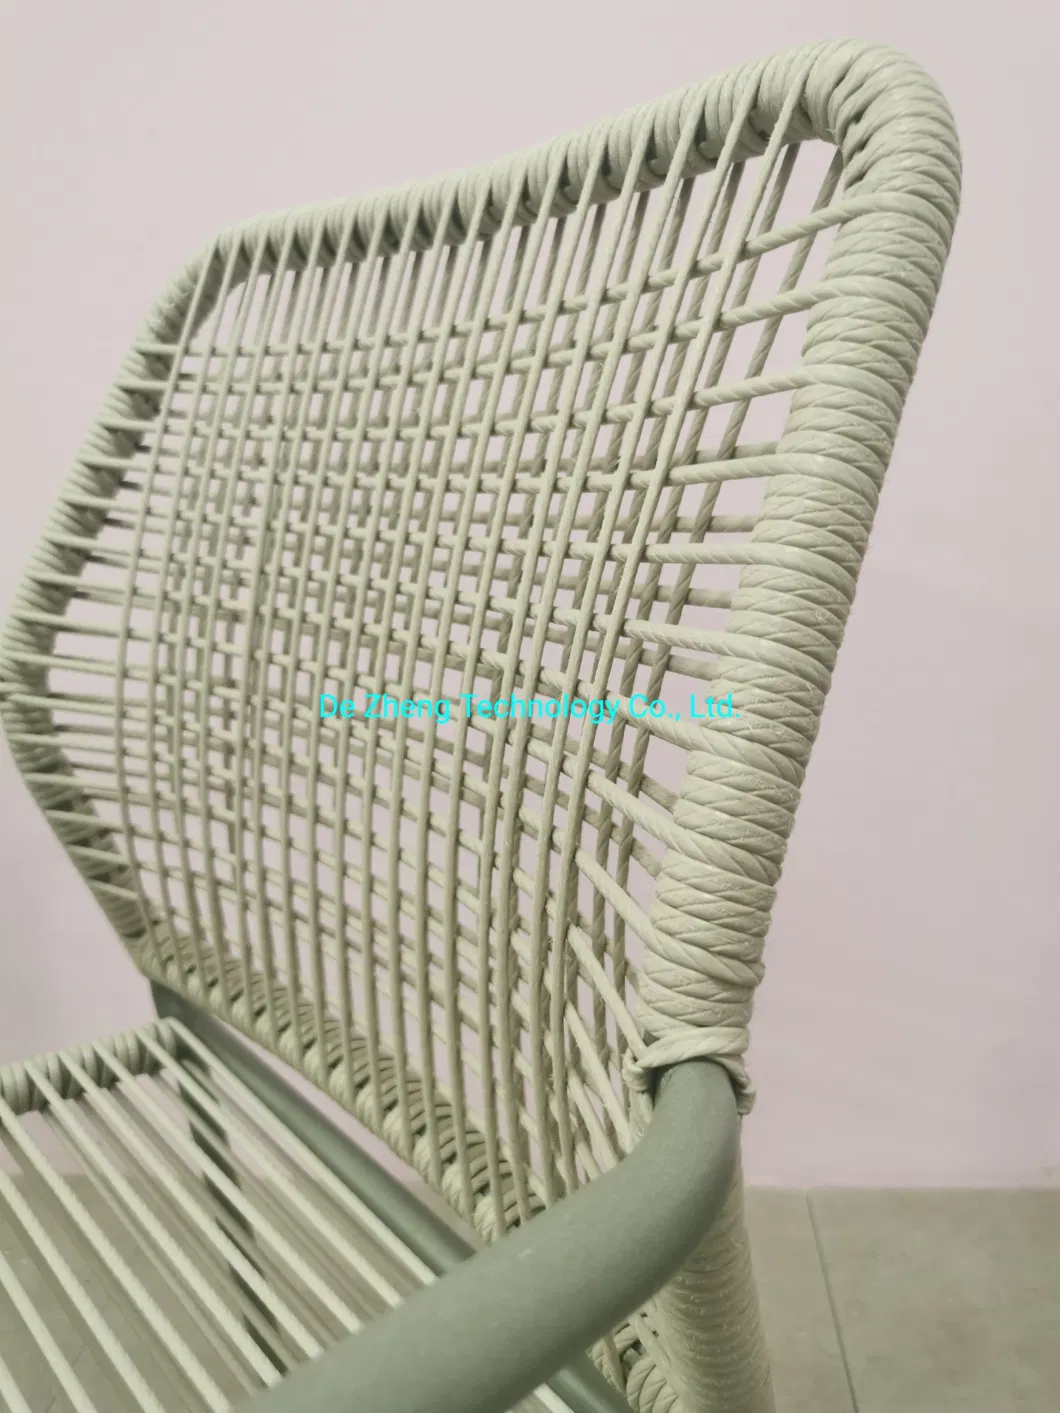 Modular Sectional Original Design Rope Aluminum Outdoor Patio Table and Chair Set Garden Furniture